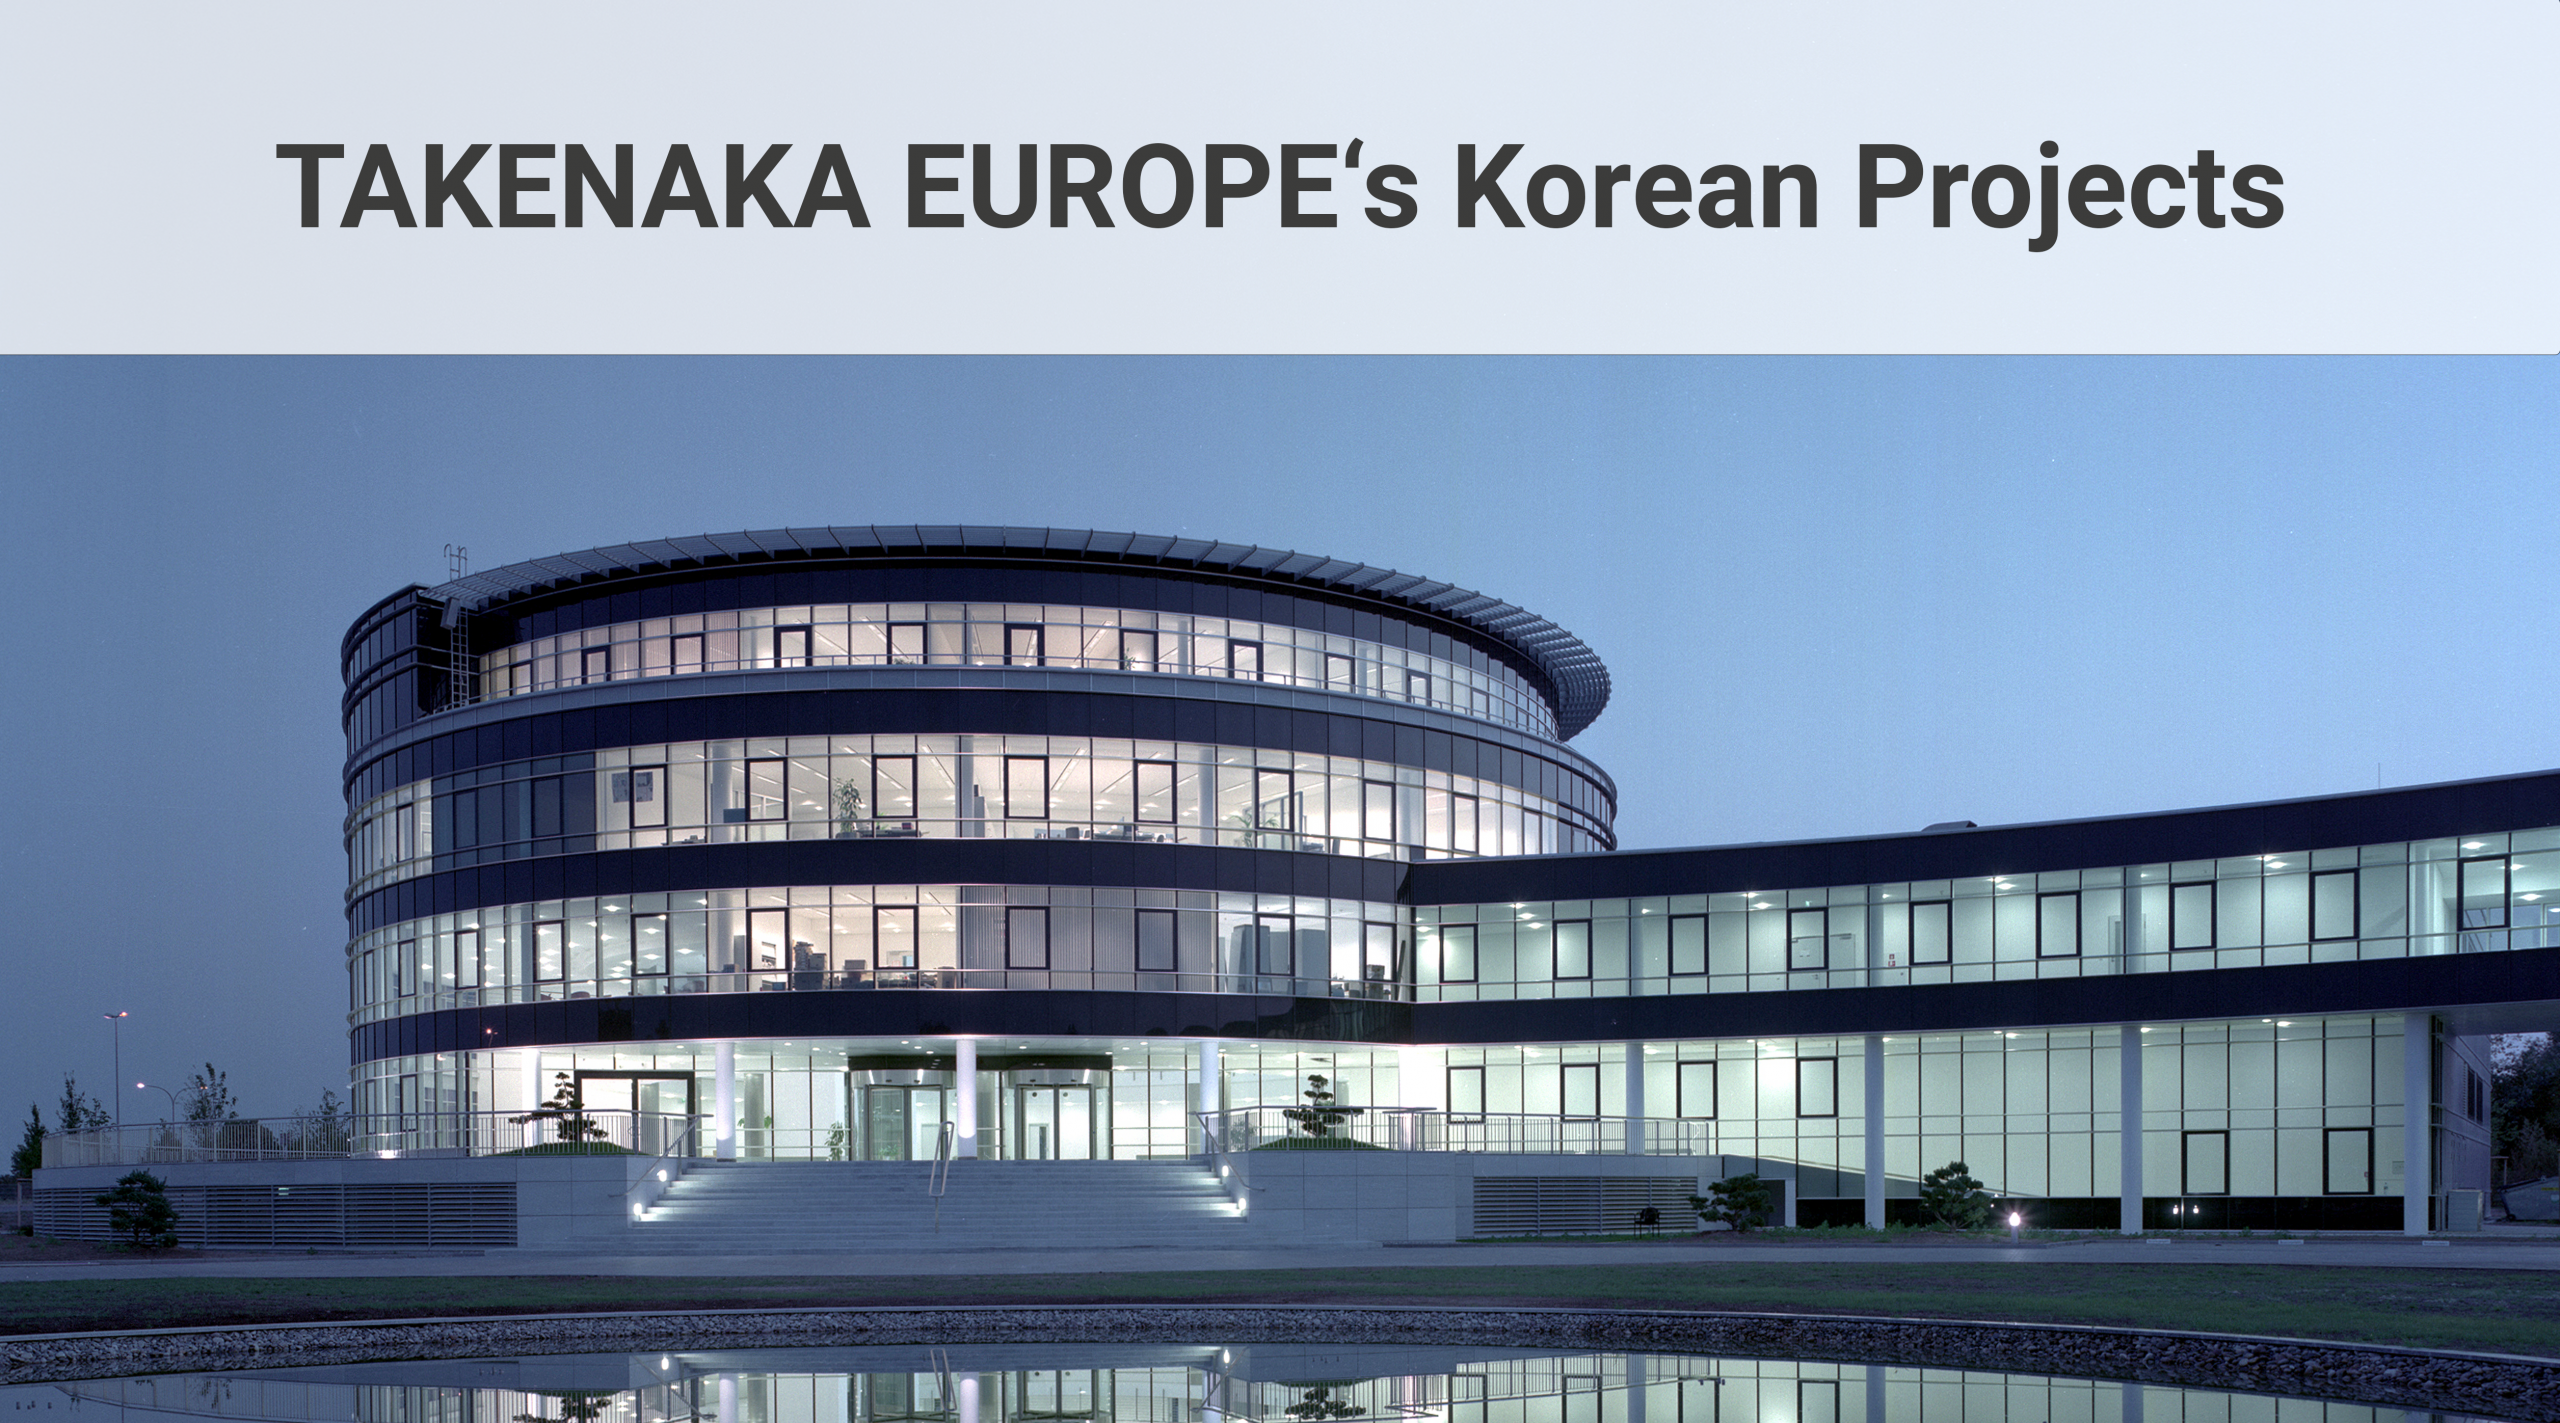 Head image - korean projects in Europe, Takenaka Europe